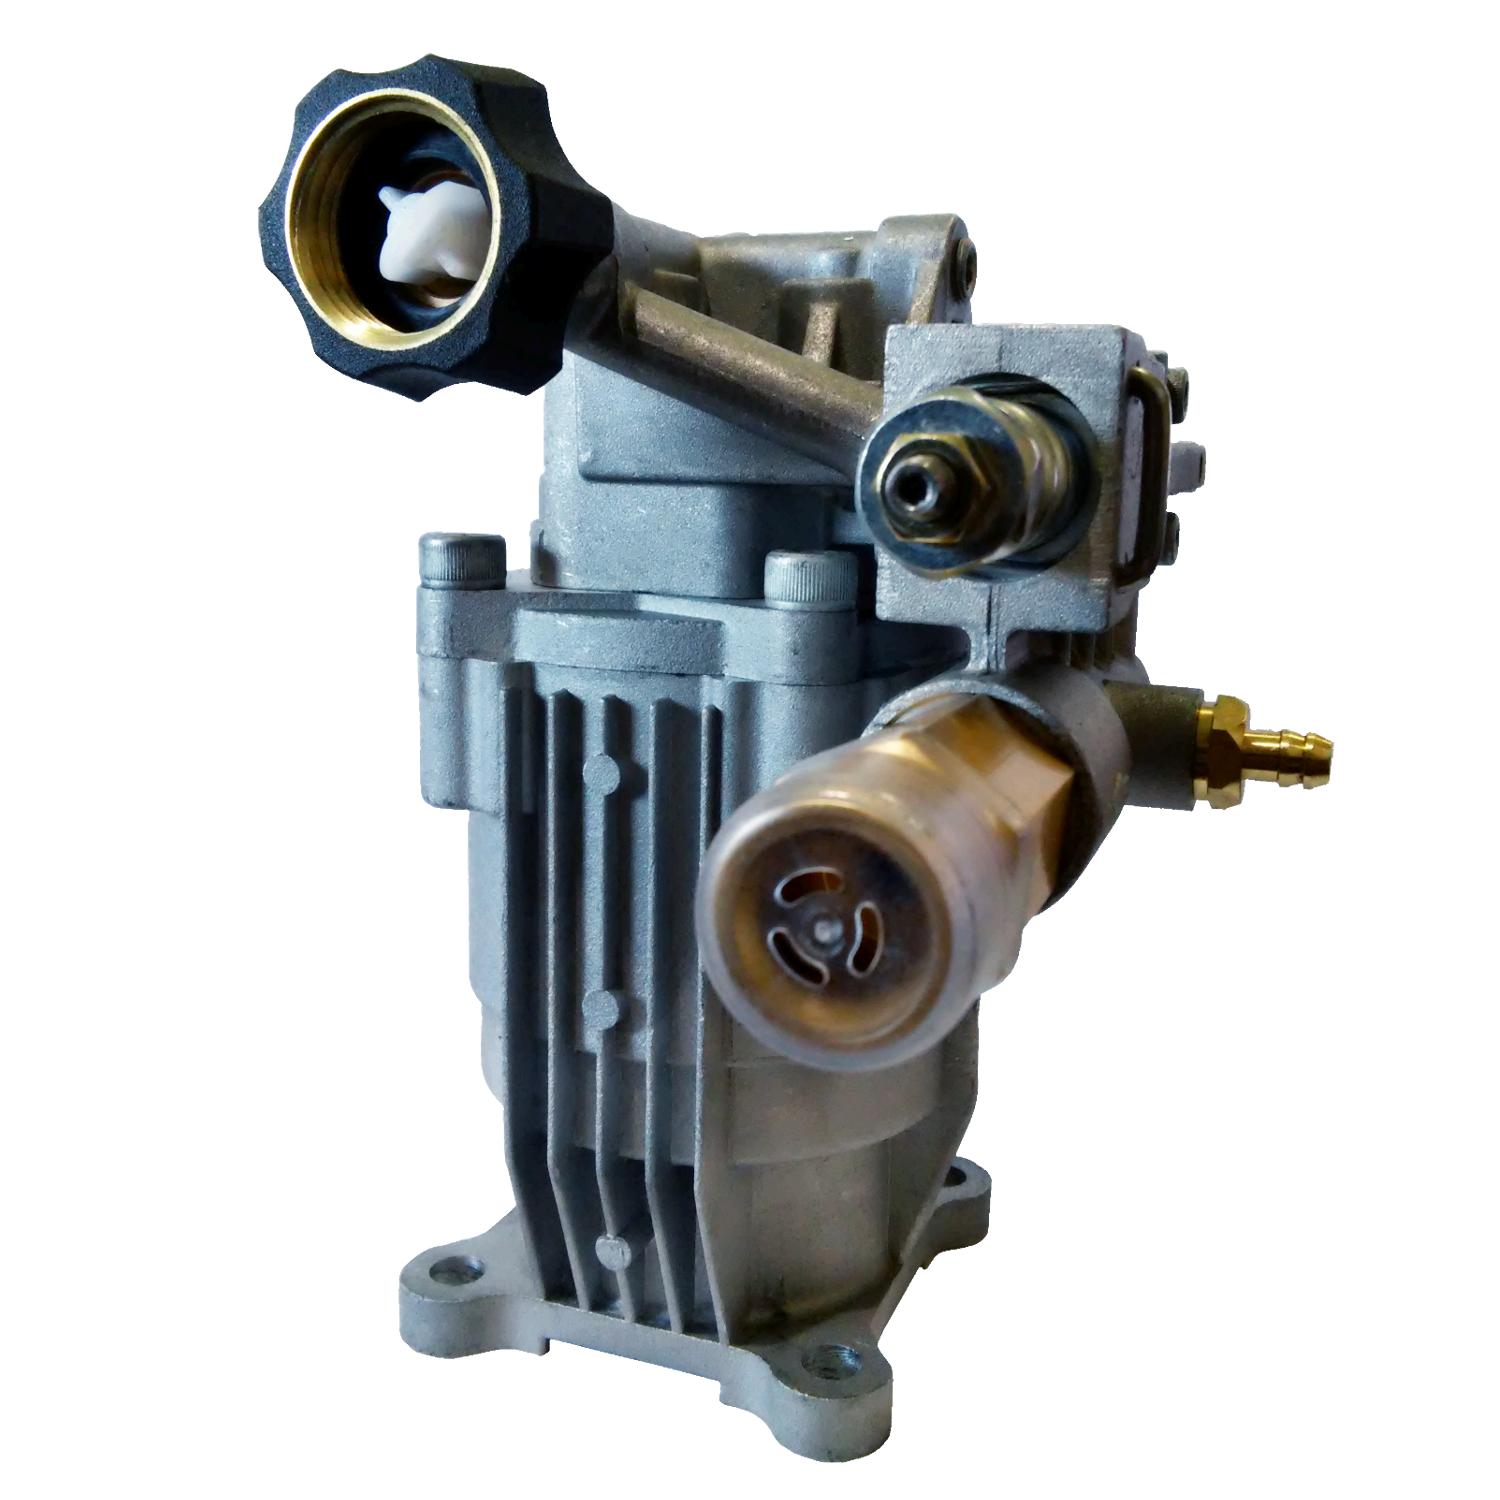 FREE KEY POWER PRESSURE WASHER PUMP 3000 PSI FOR HONDA Engines GX160 GX200